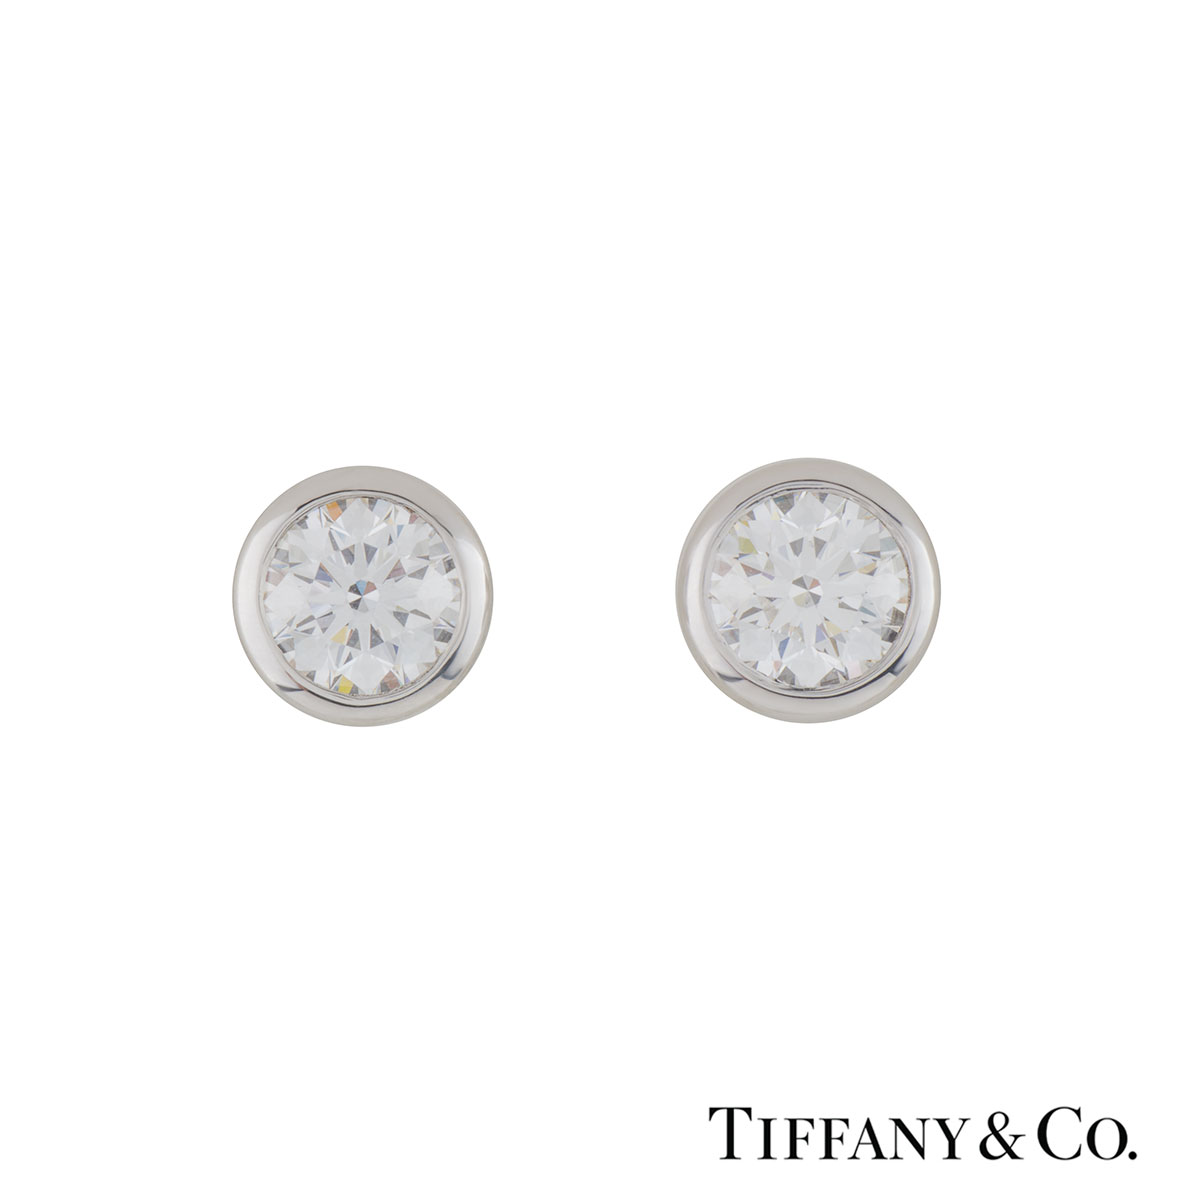 tiffany & co white gold earrings